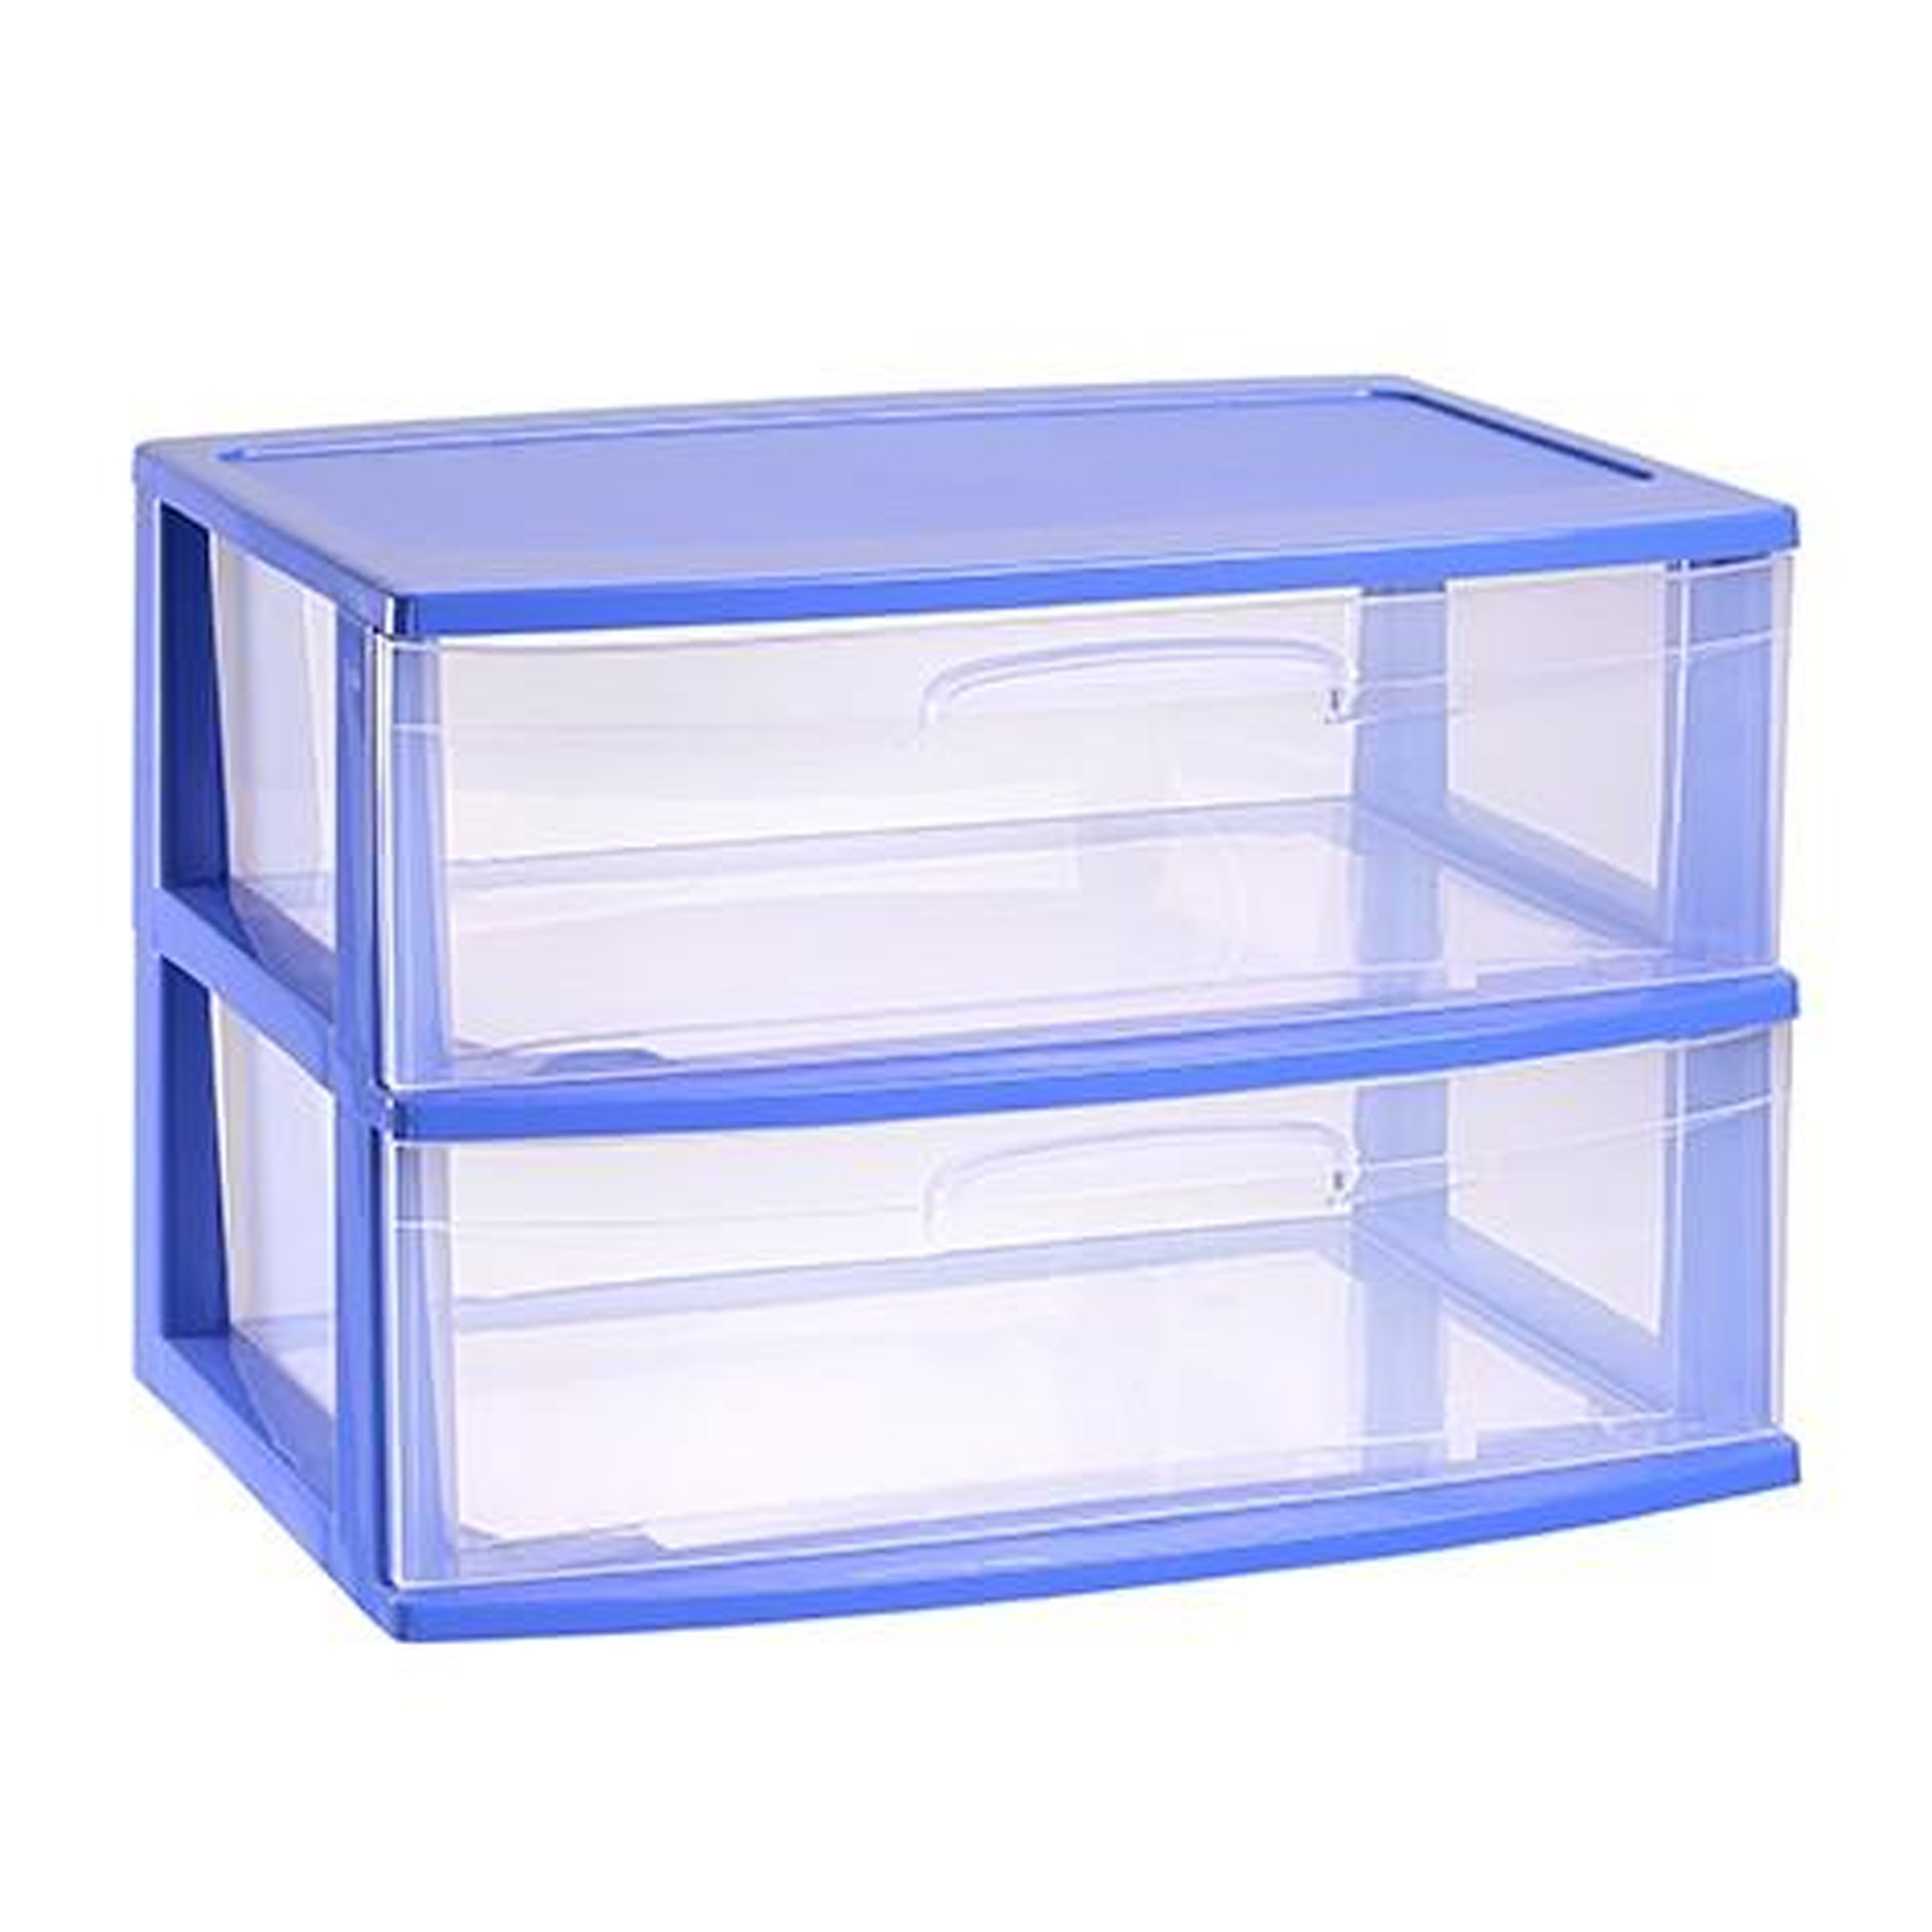 Ladeblokje-spullen storage organizer 2x lades blauw-transparant L56 x B40 x H41 cm plastic